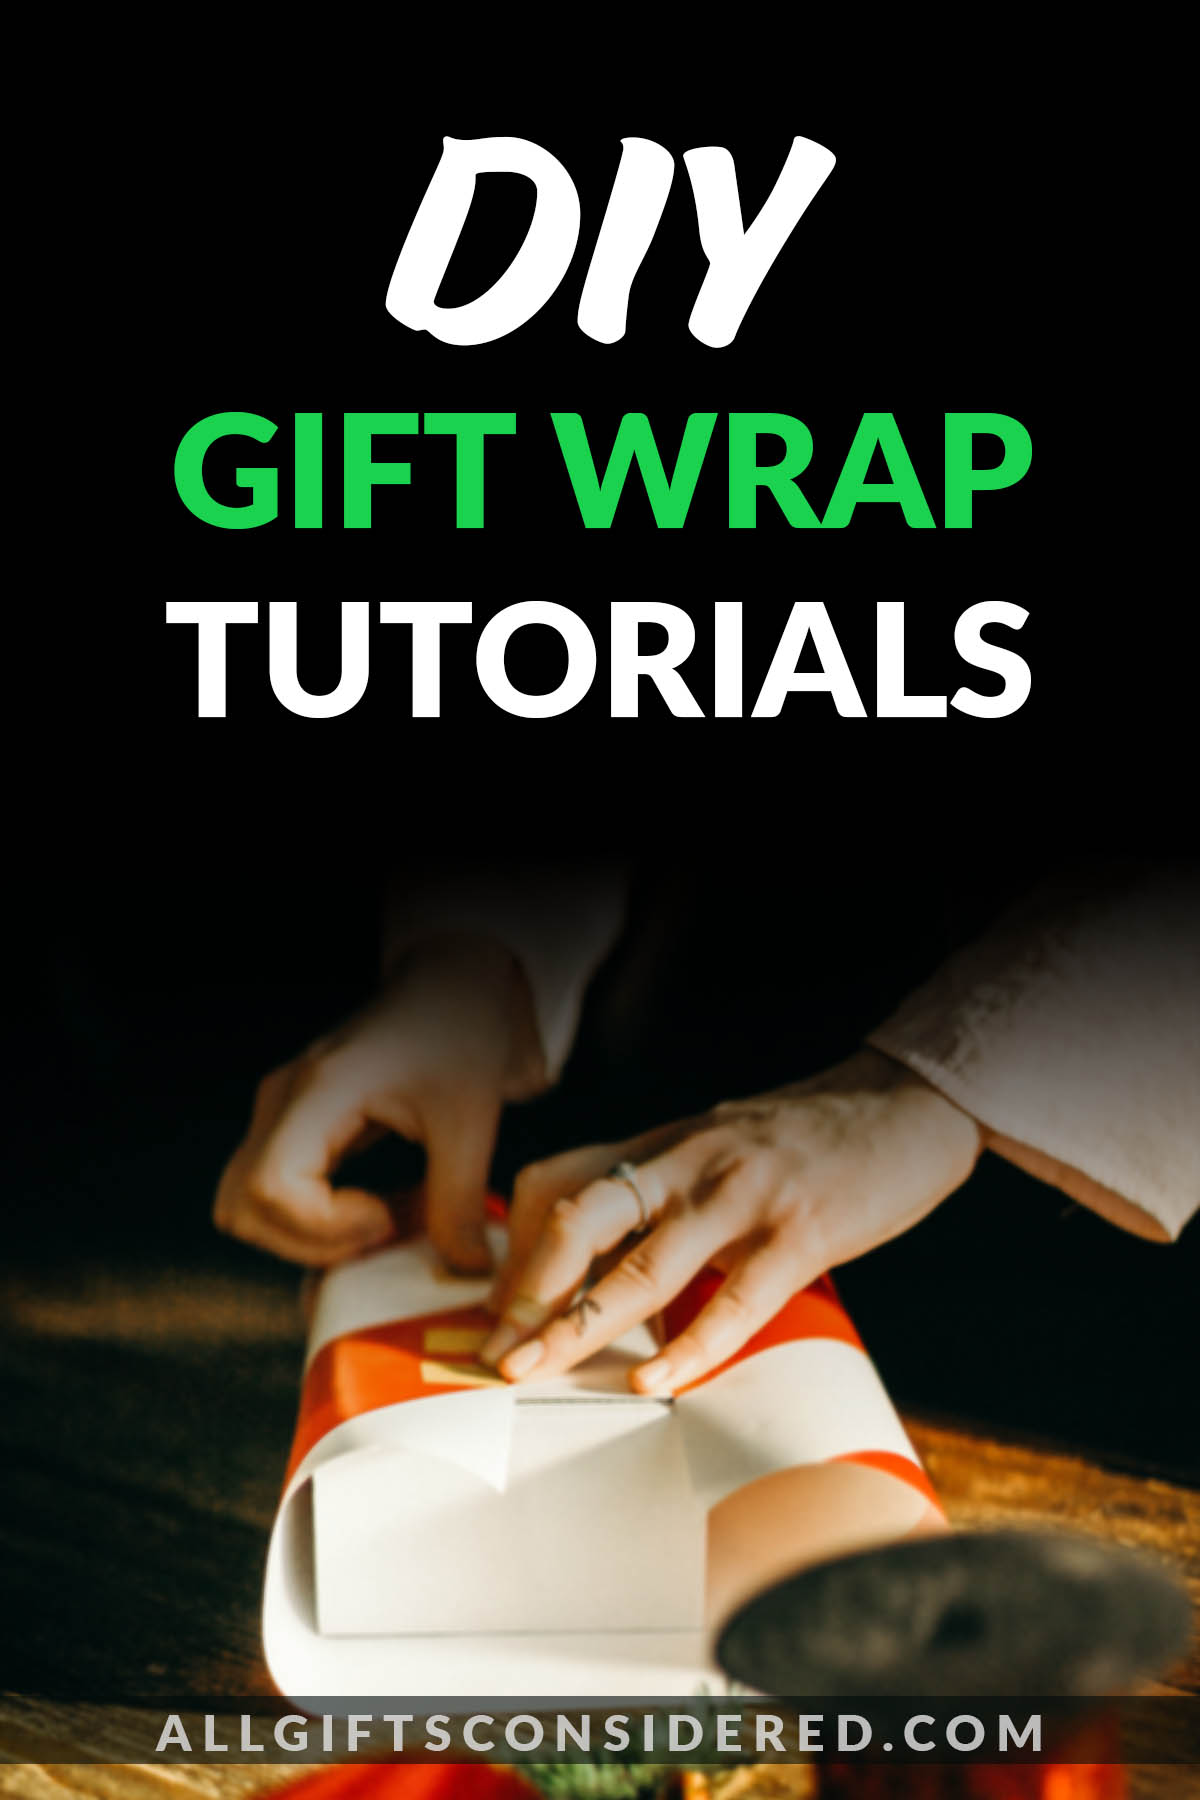 diy gift wrap tutorials - feature image